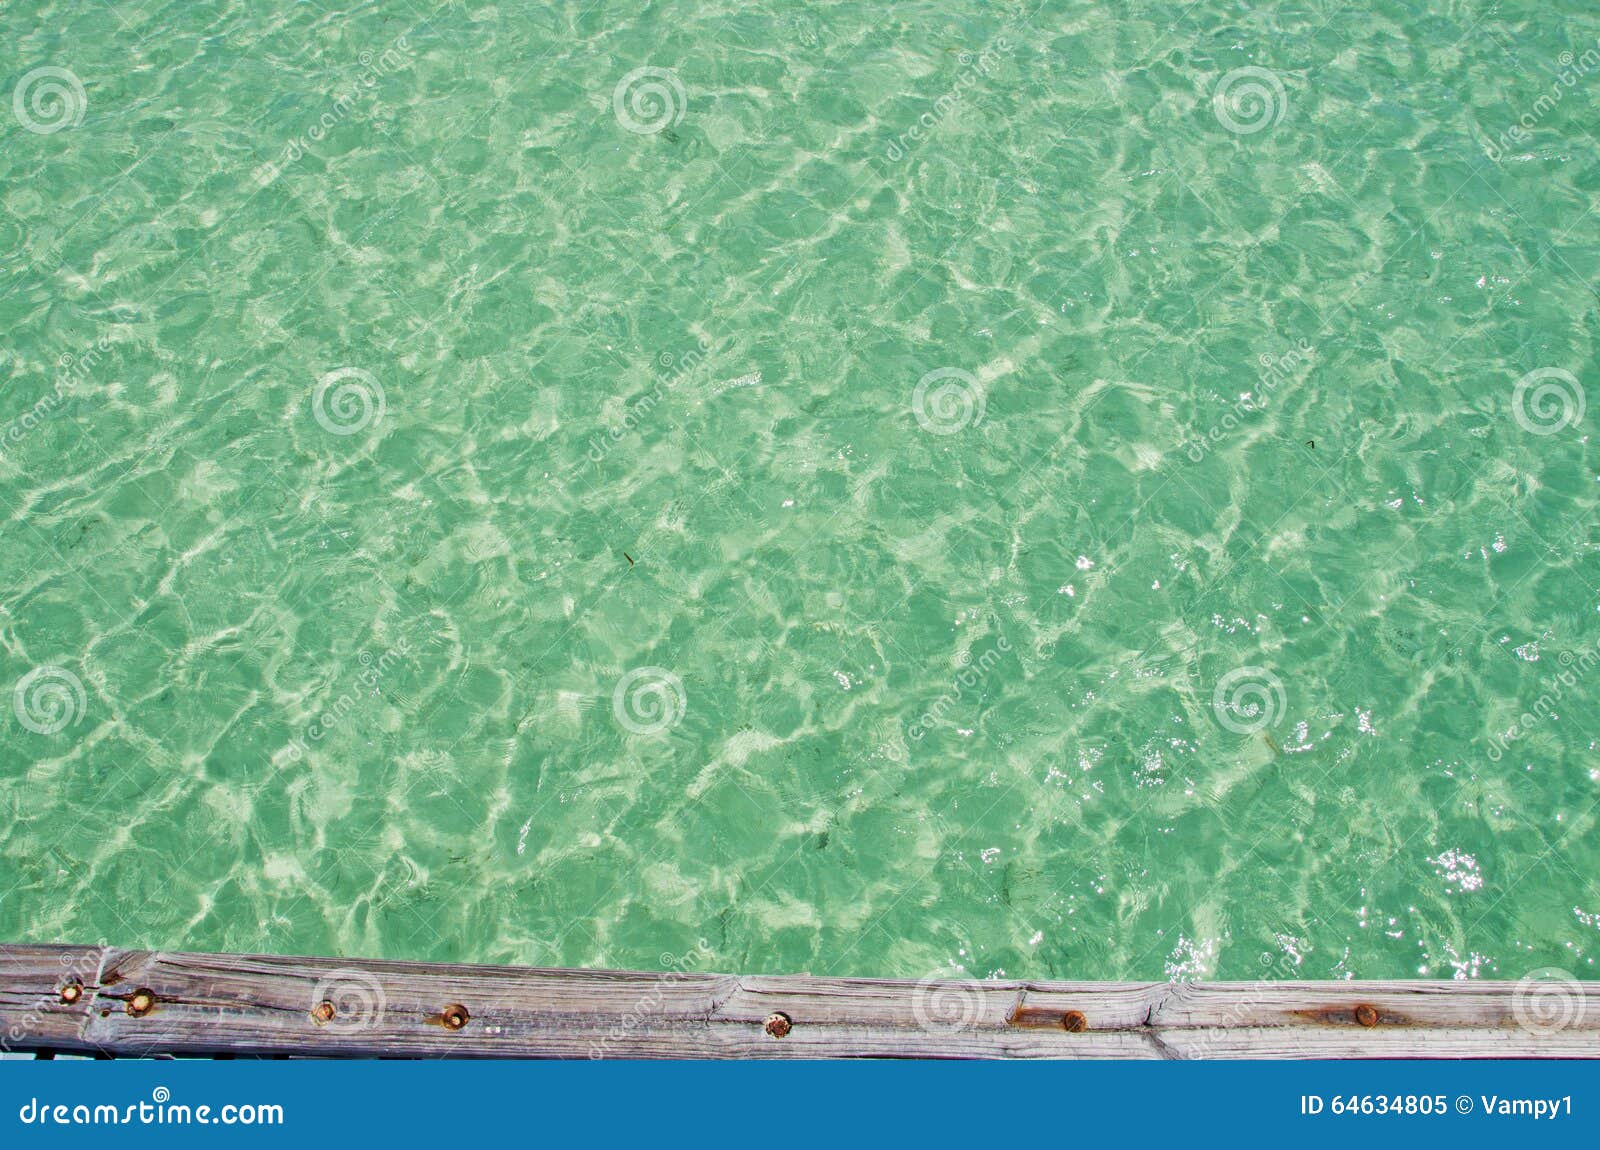 higgs beach pier, sea, key west, keys, cayo hueso, monroe county, island, florida